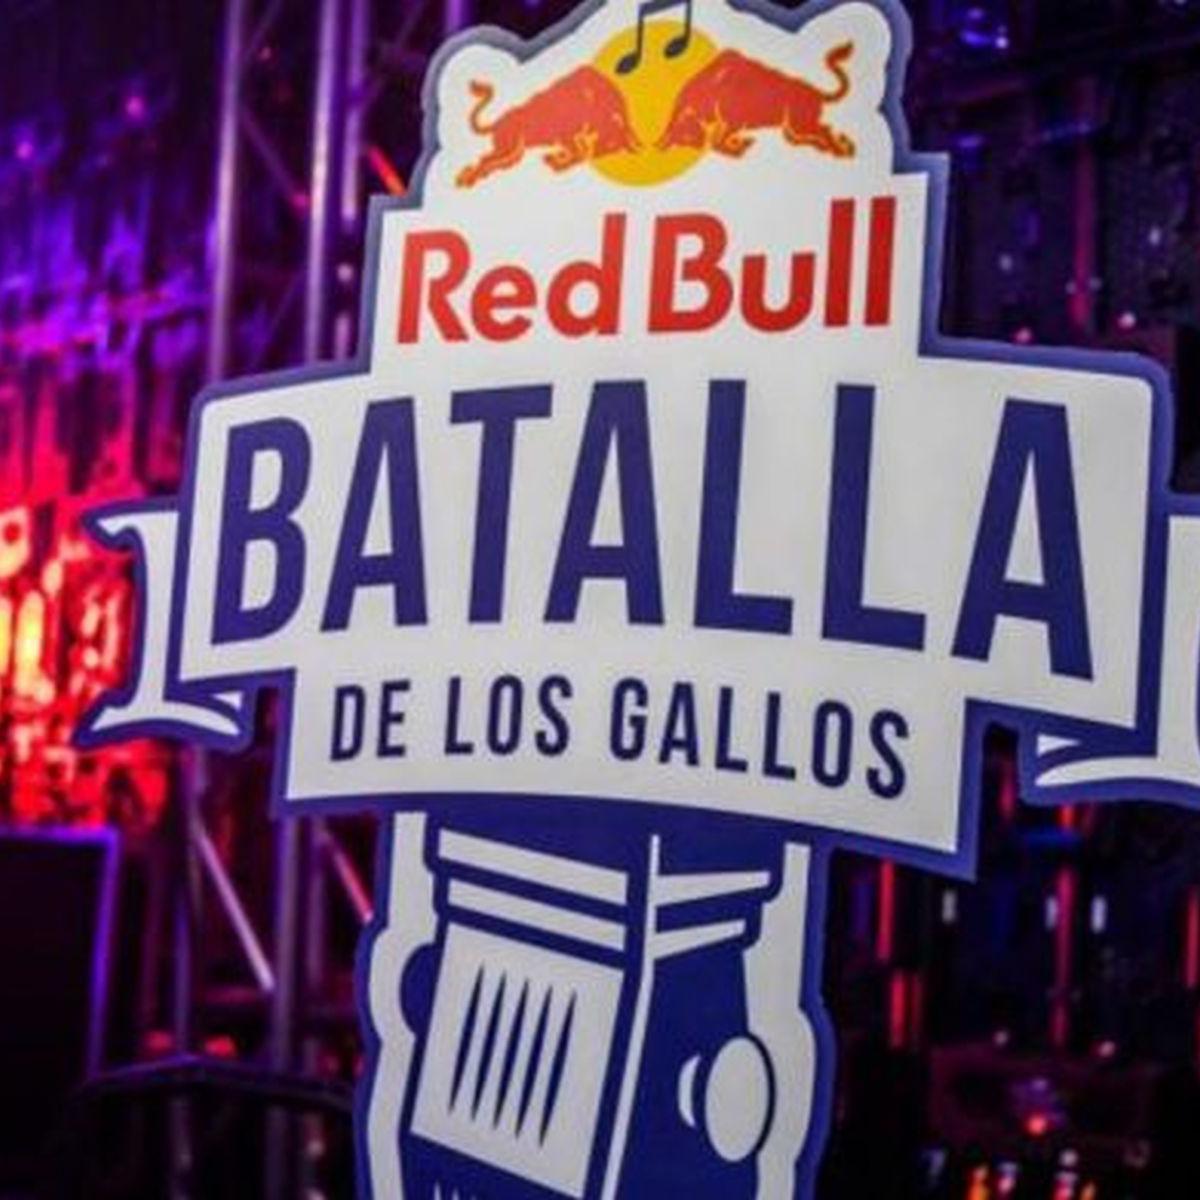 Final Internacional 2022 Red Bull Batalla Results: Three-time